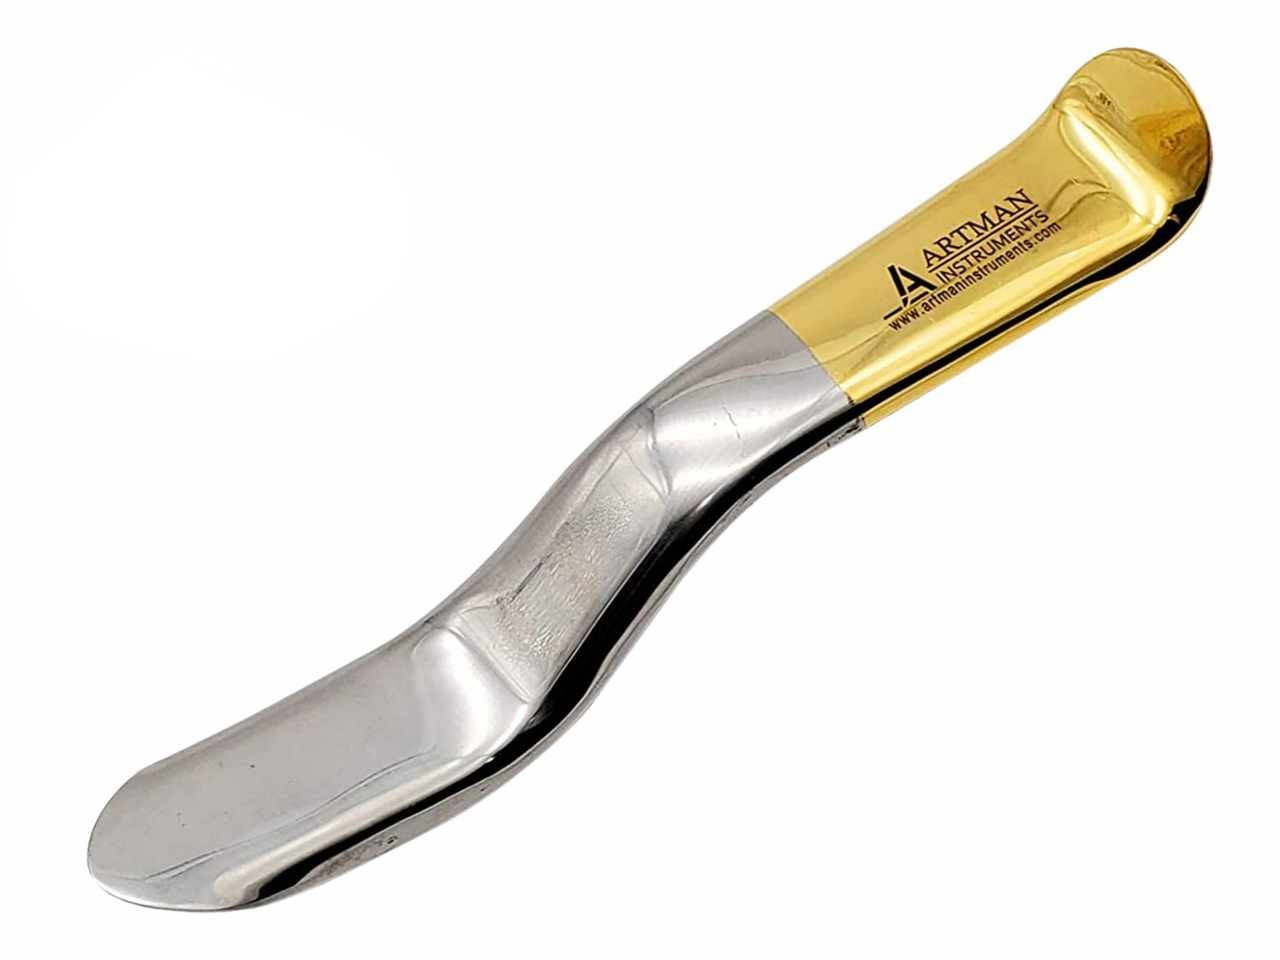 Minnesota Cheek Retractor Gold Plated Surgical Dental Instruments ARTMAN